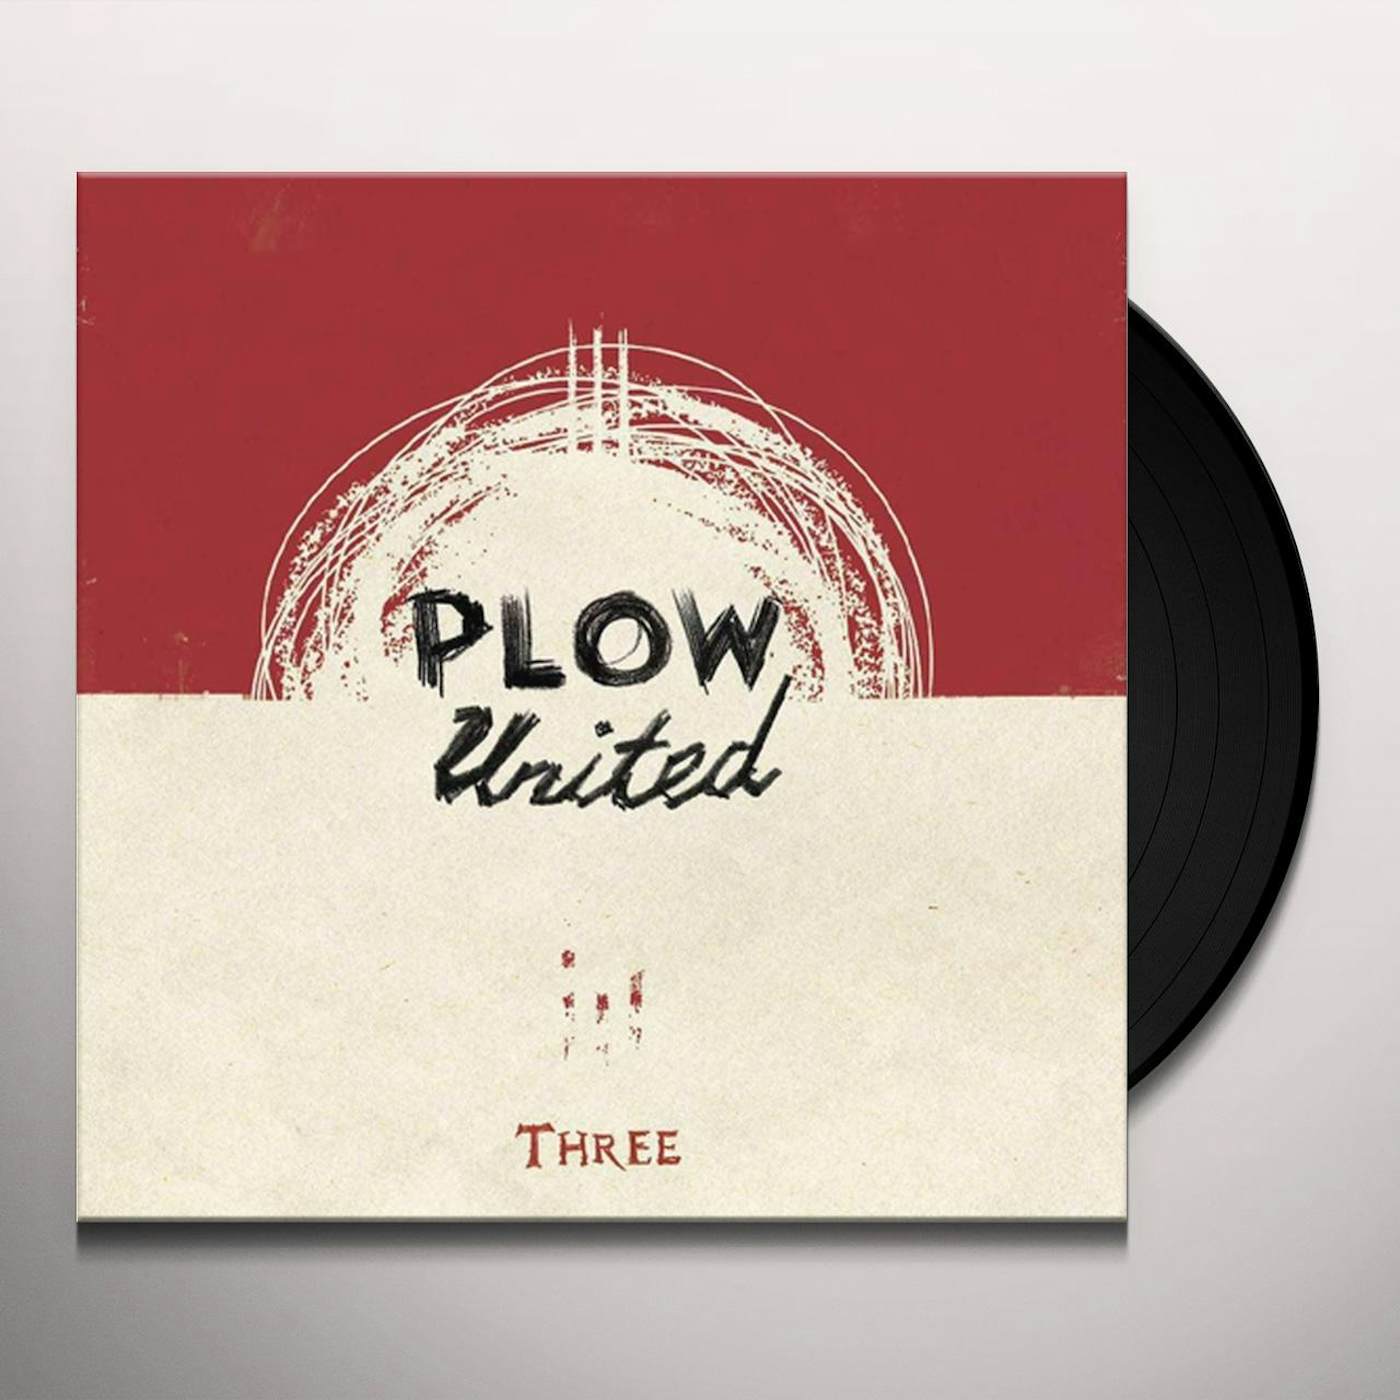 Plow United THREE Vinyl Record